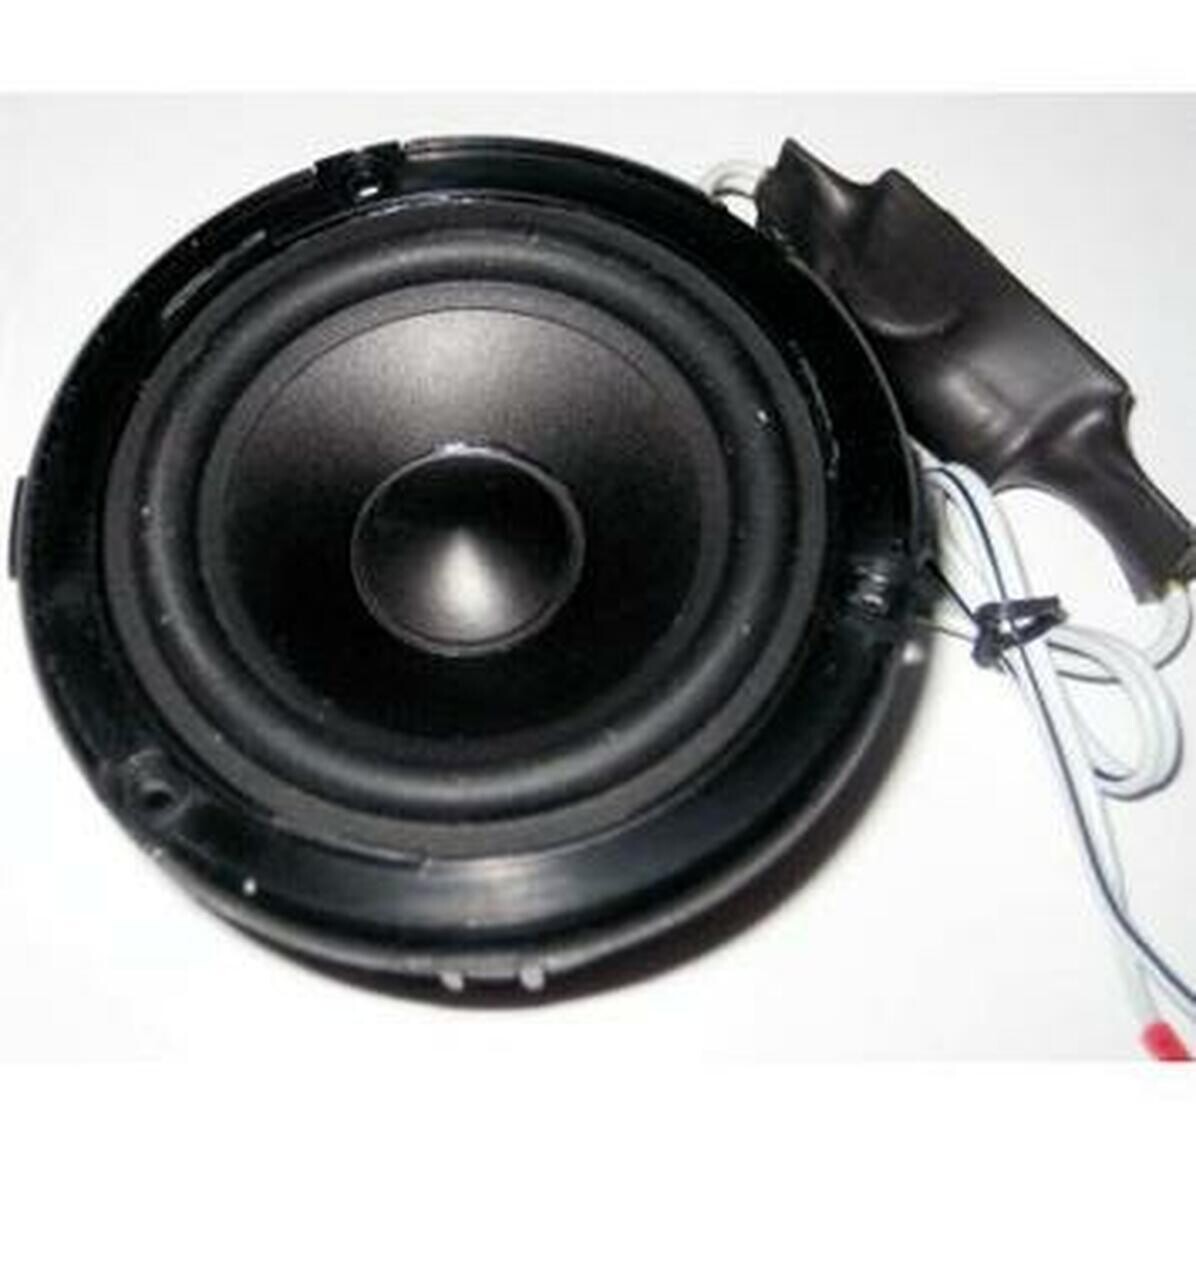 Artesian Spas speaker luidspreker zonder grill